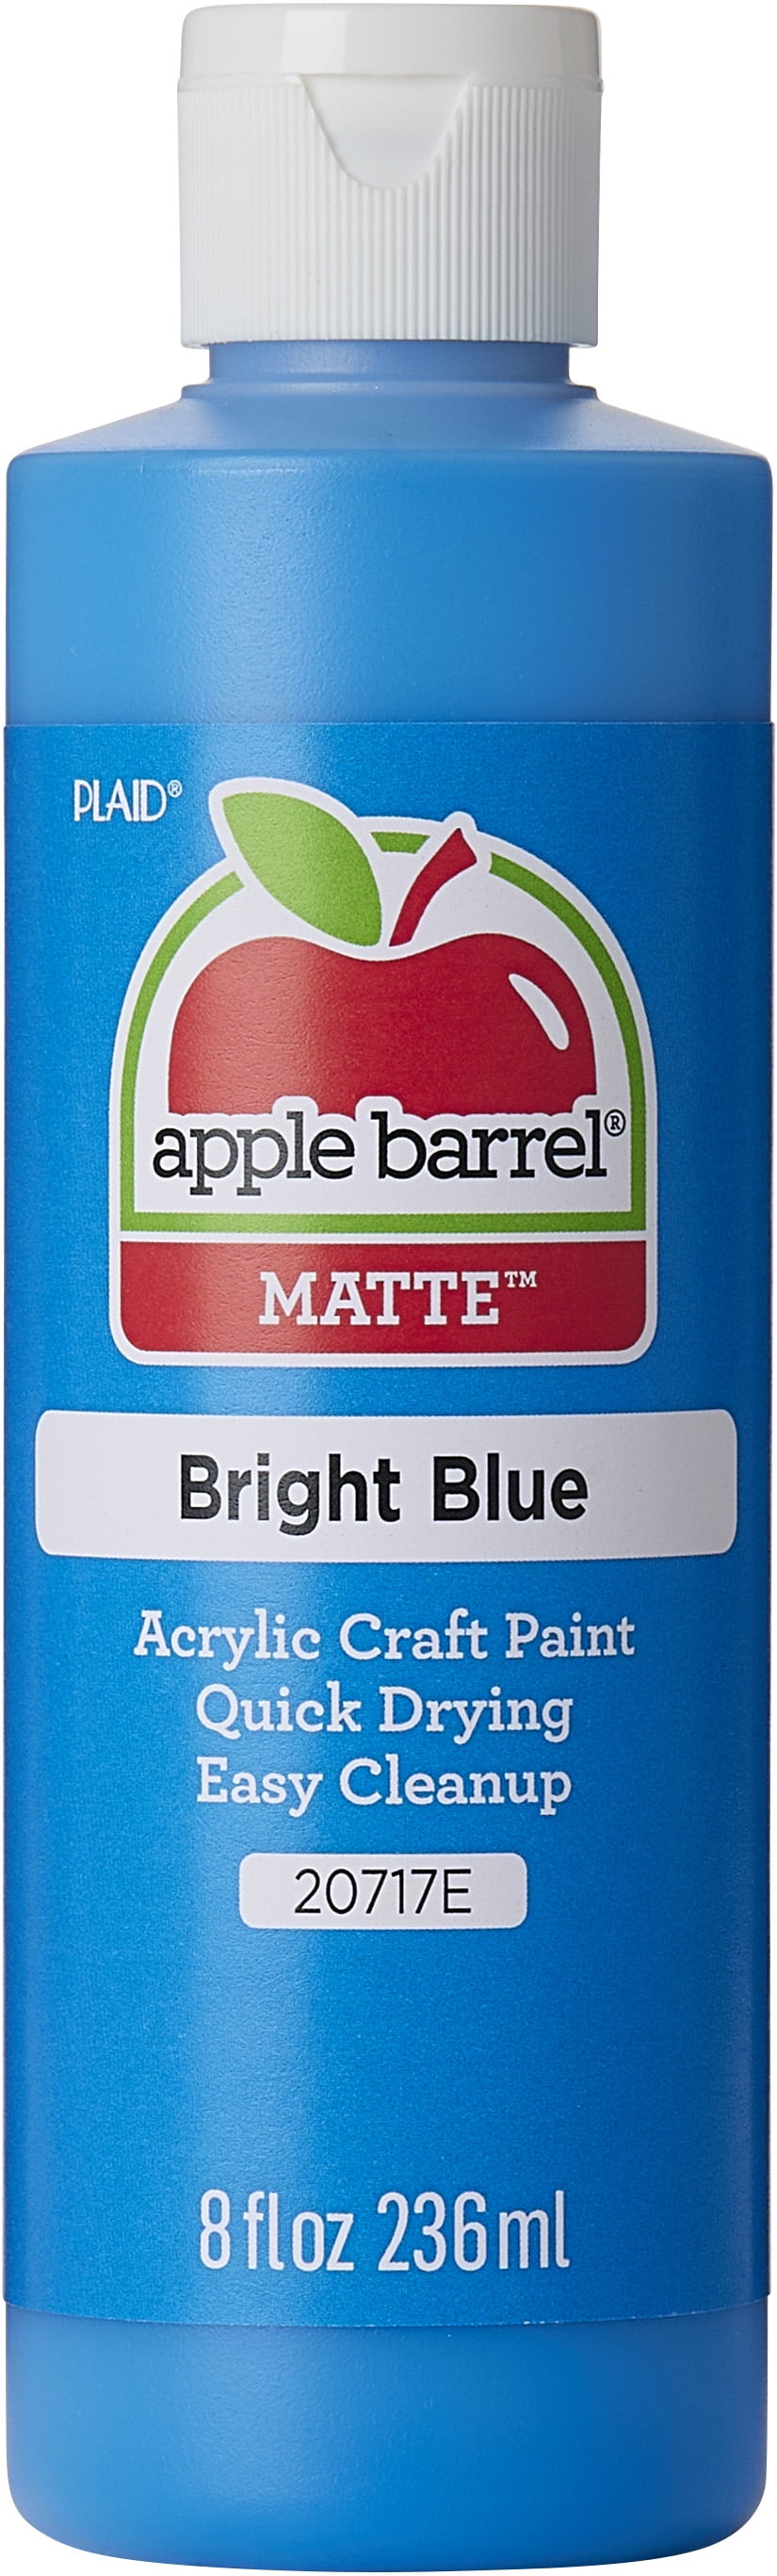 Apple Barrel Acrylic Craft Paint, Matte Finish, Bright Blue, 8 fl oz